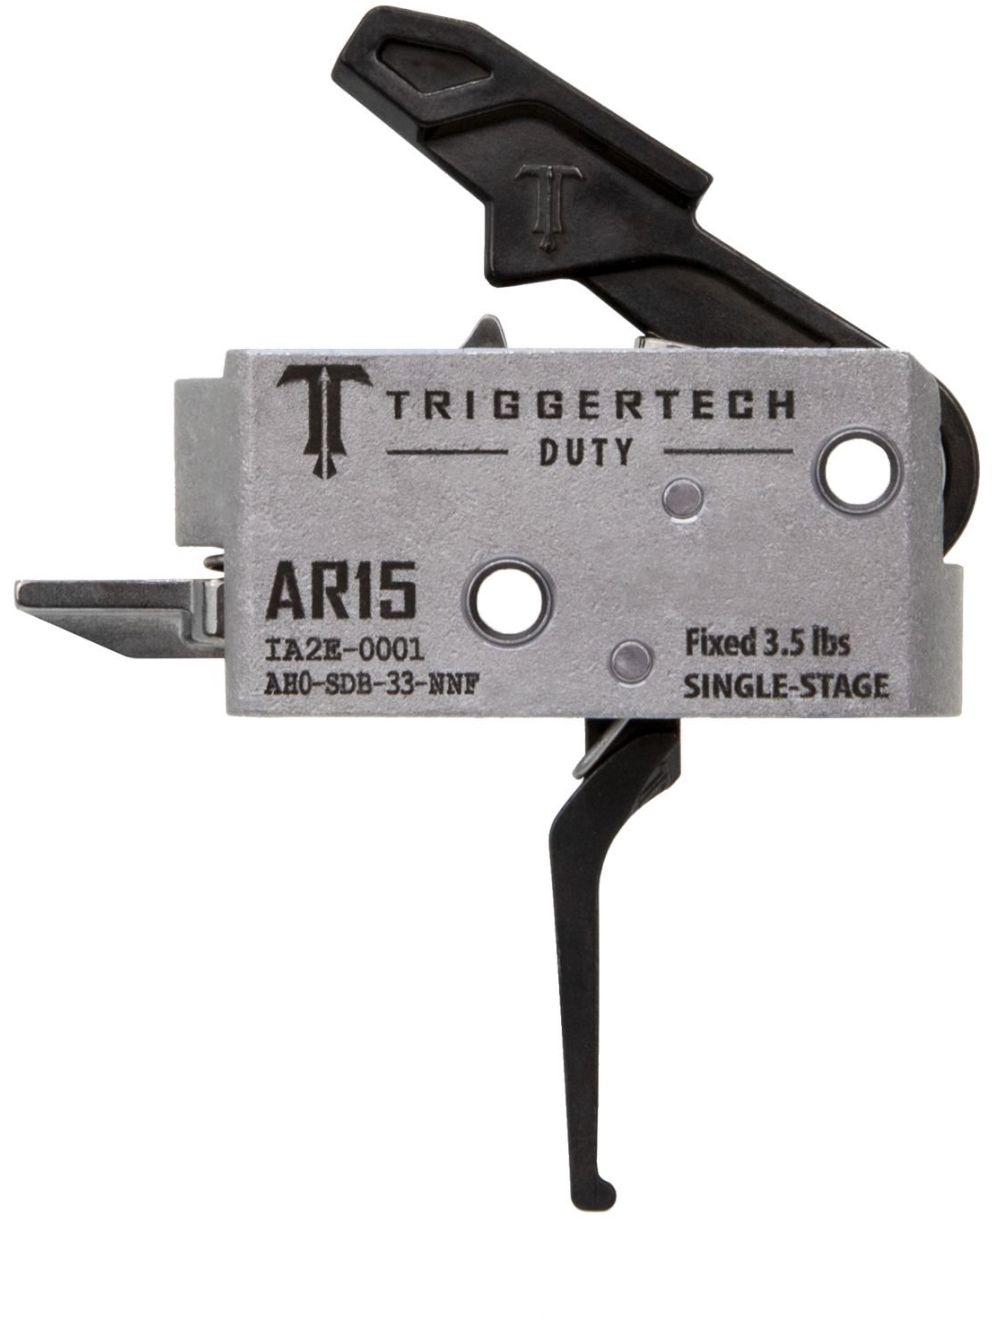 AR15 Single-Stage Trigger